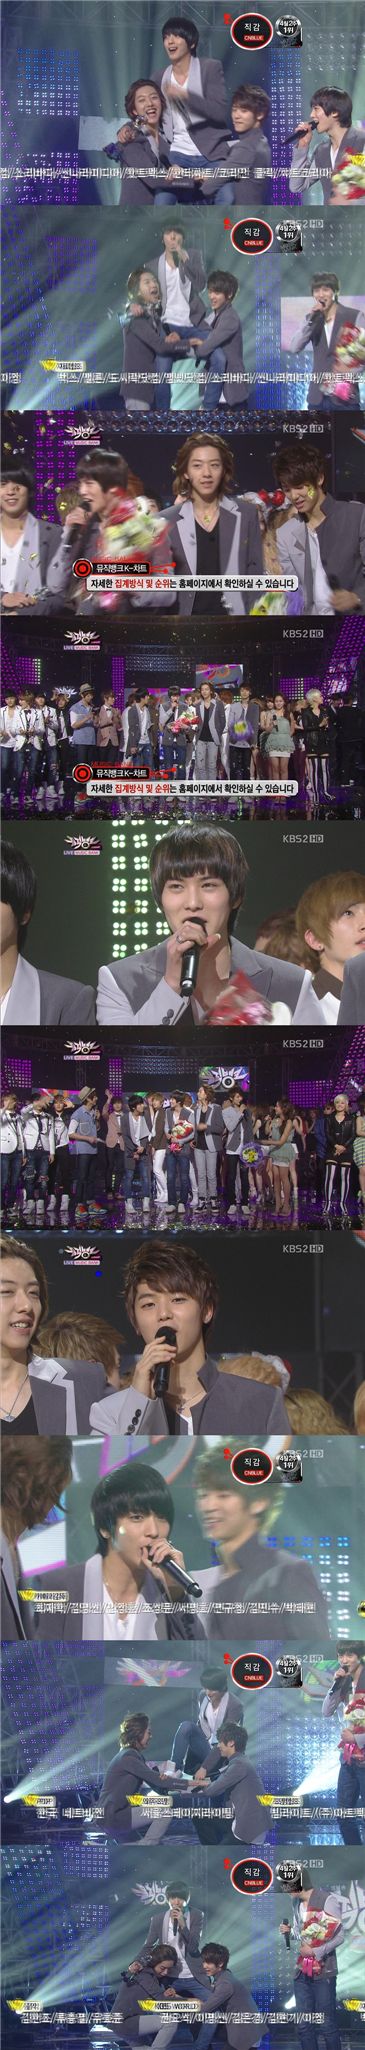 CNBLUE on KBS music show "Music Bank" on April 8, 2011 [KBS] 